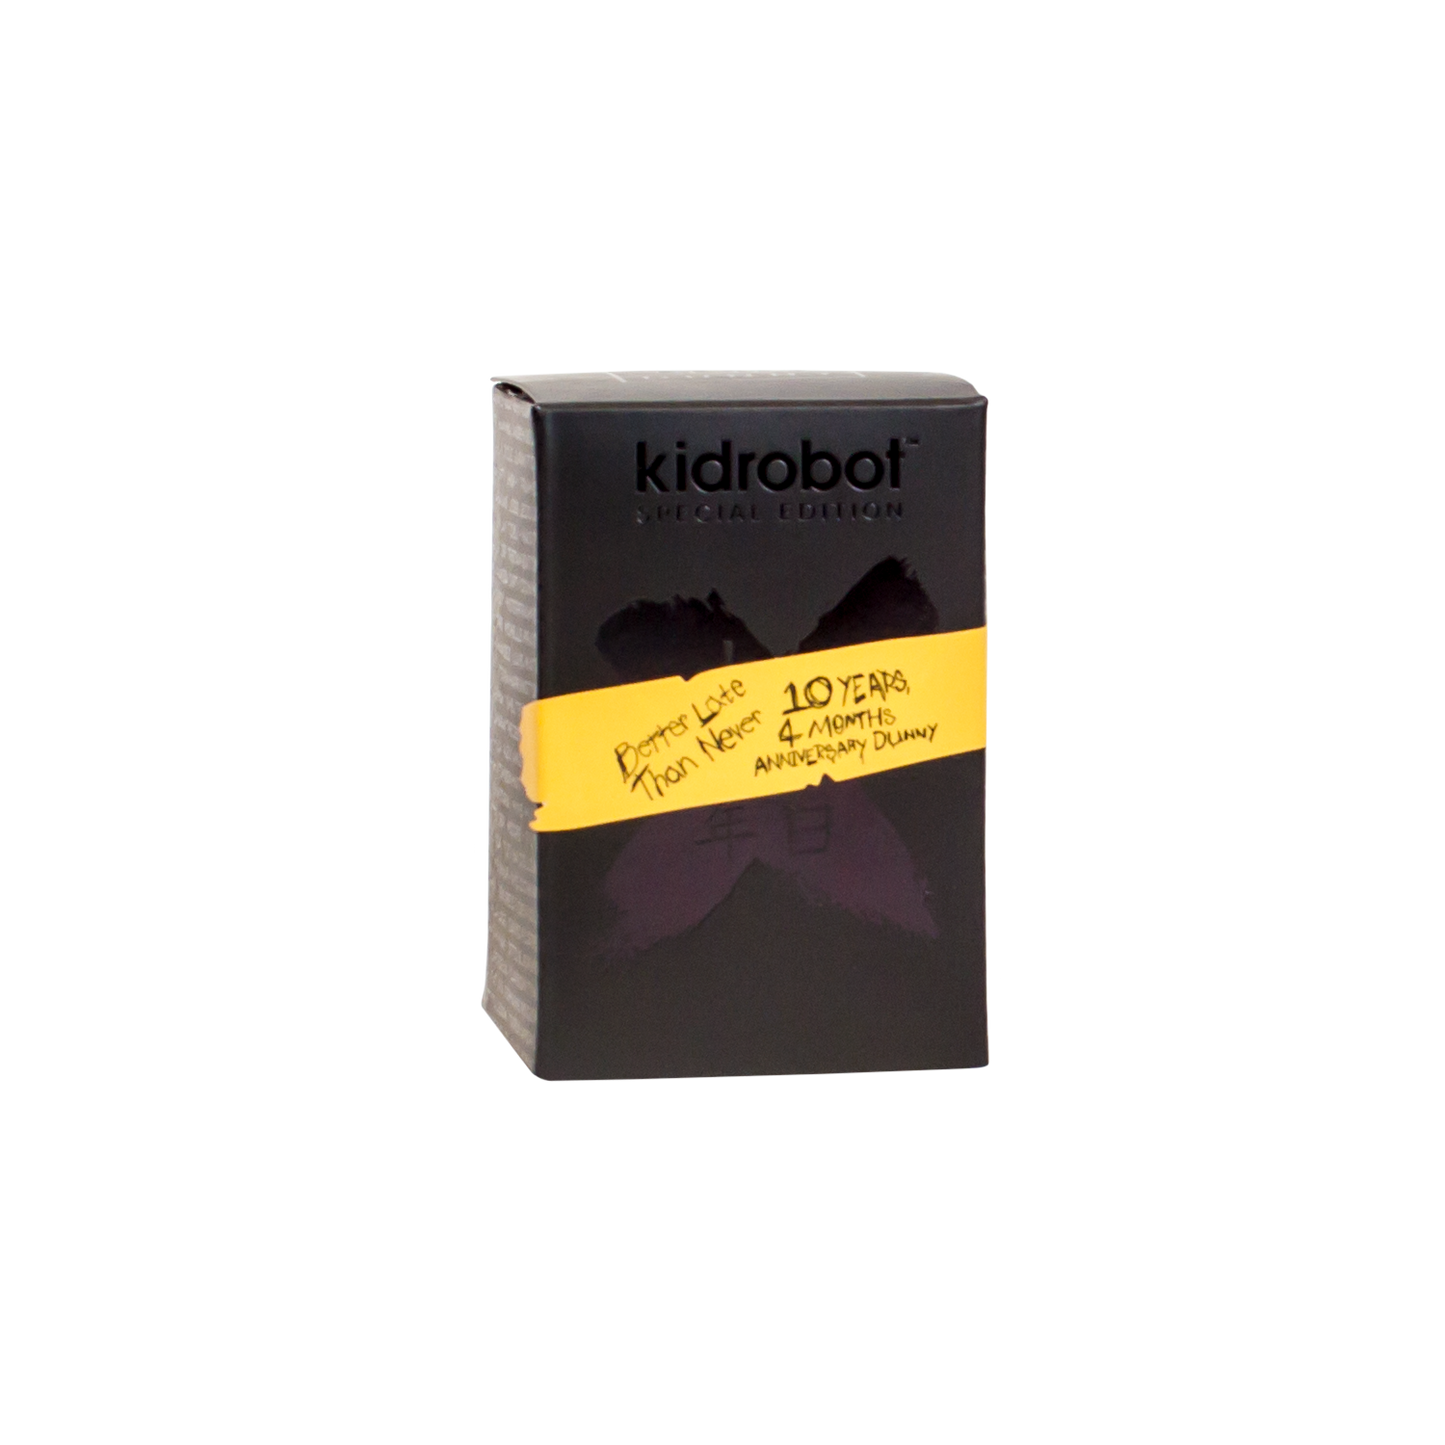 Kidrobot Dunny 10th Anniversary Black 3-inch Vinyl Figure